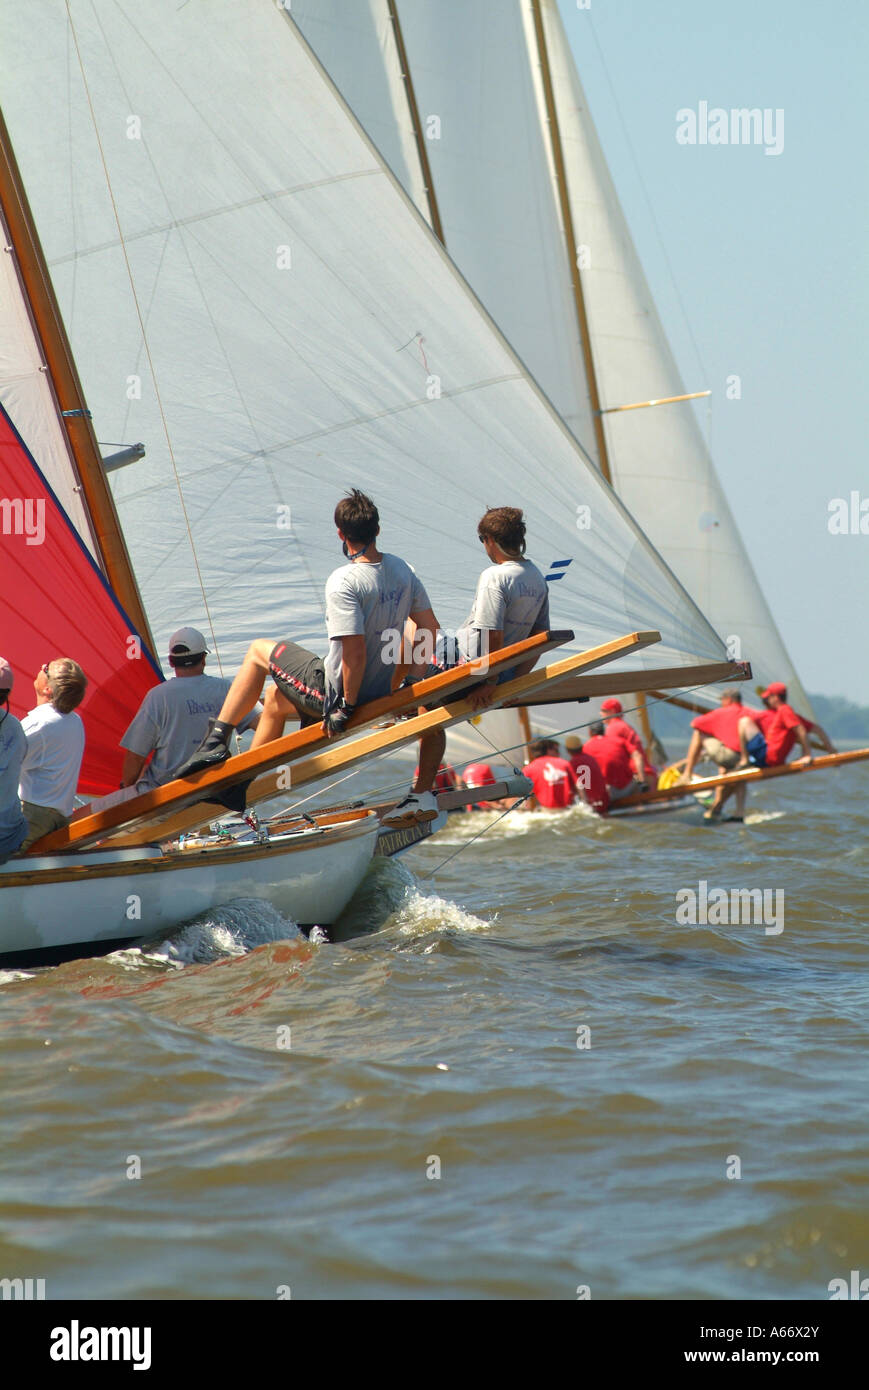 Log canoe sailboat racing on a  Chesapeake Bay region river Stock Photo